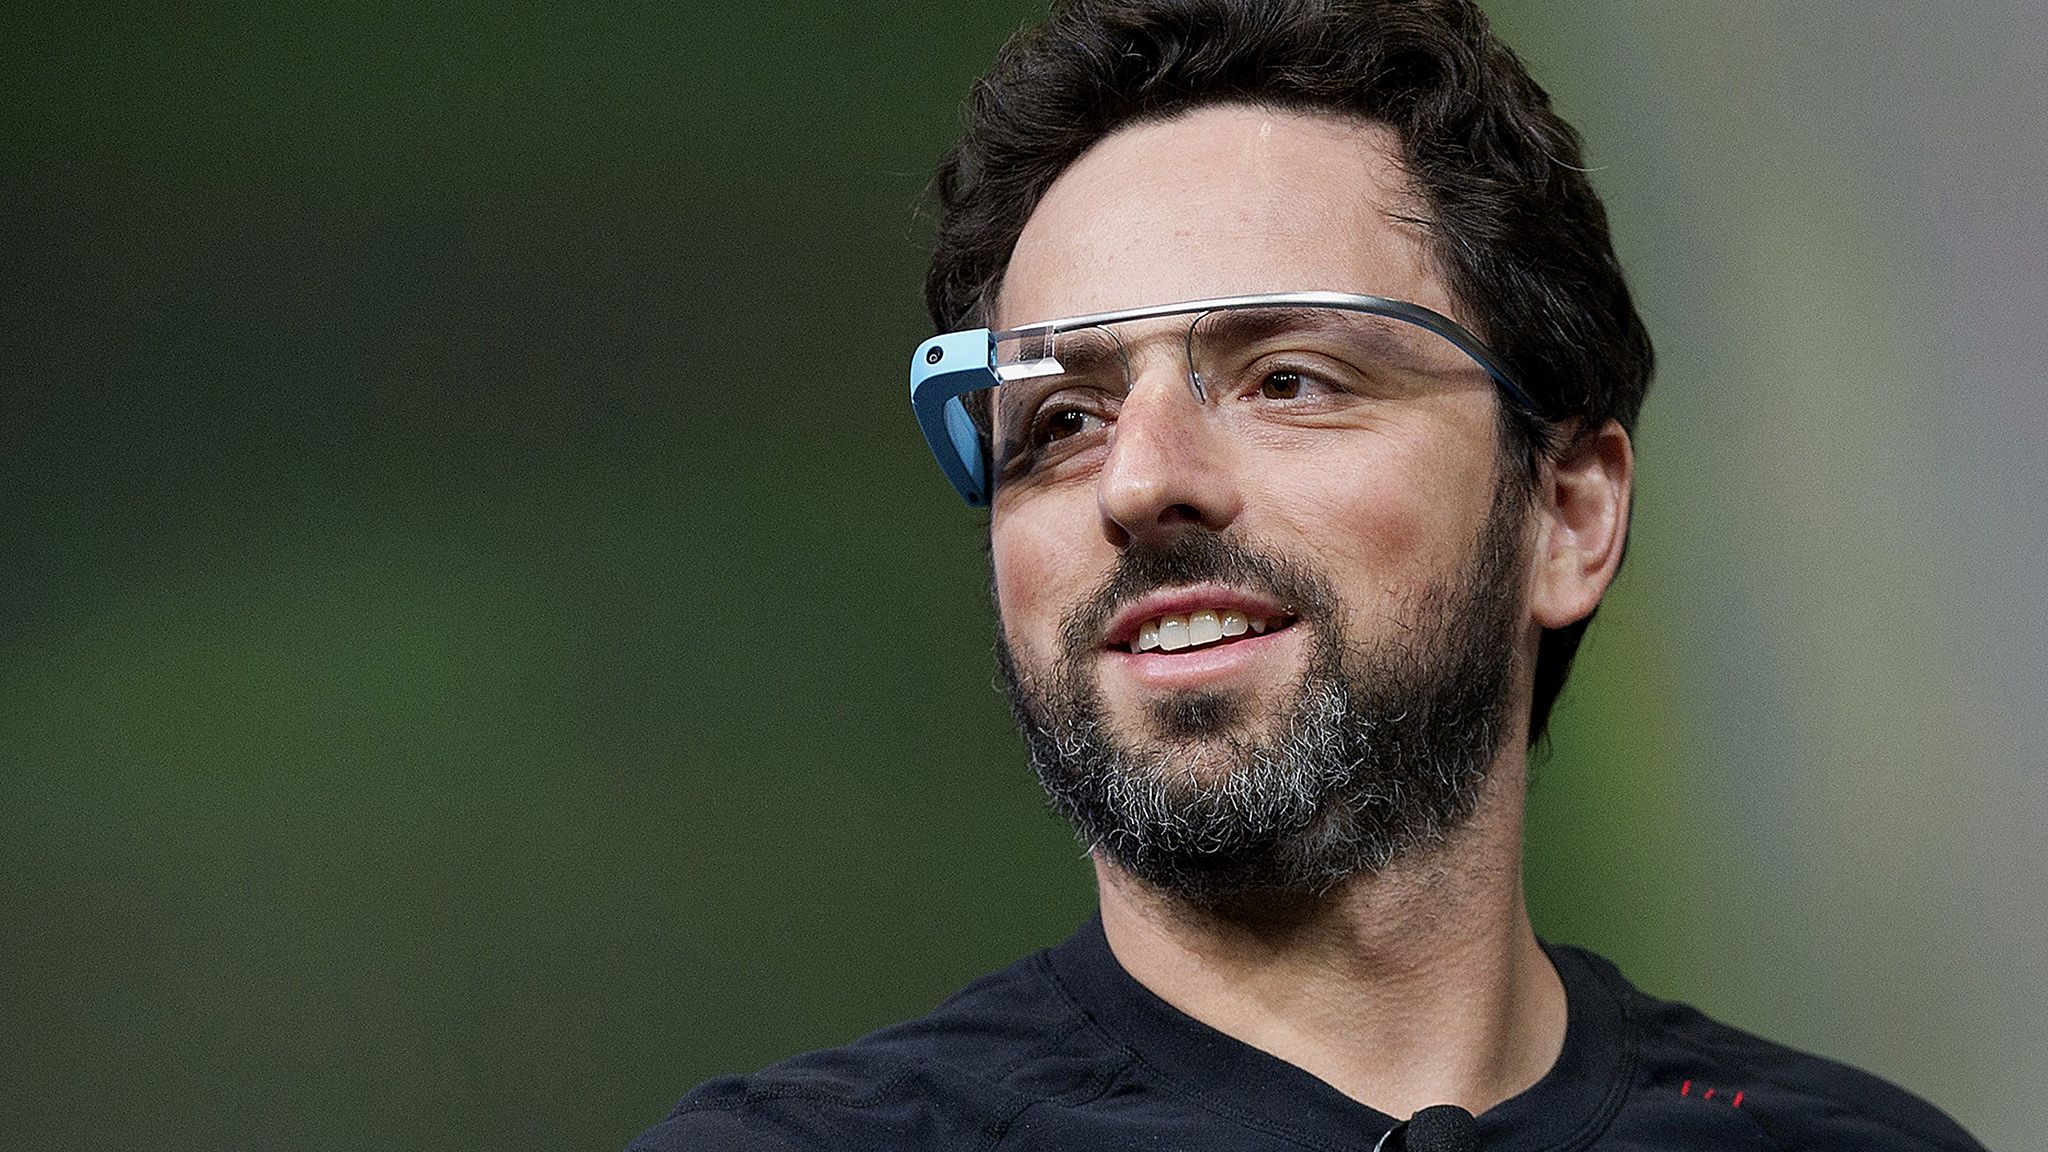 Google's Sergey Brin flags concerns over AI 'revolution